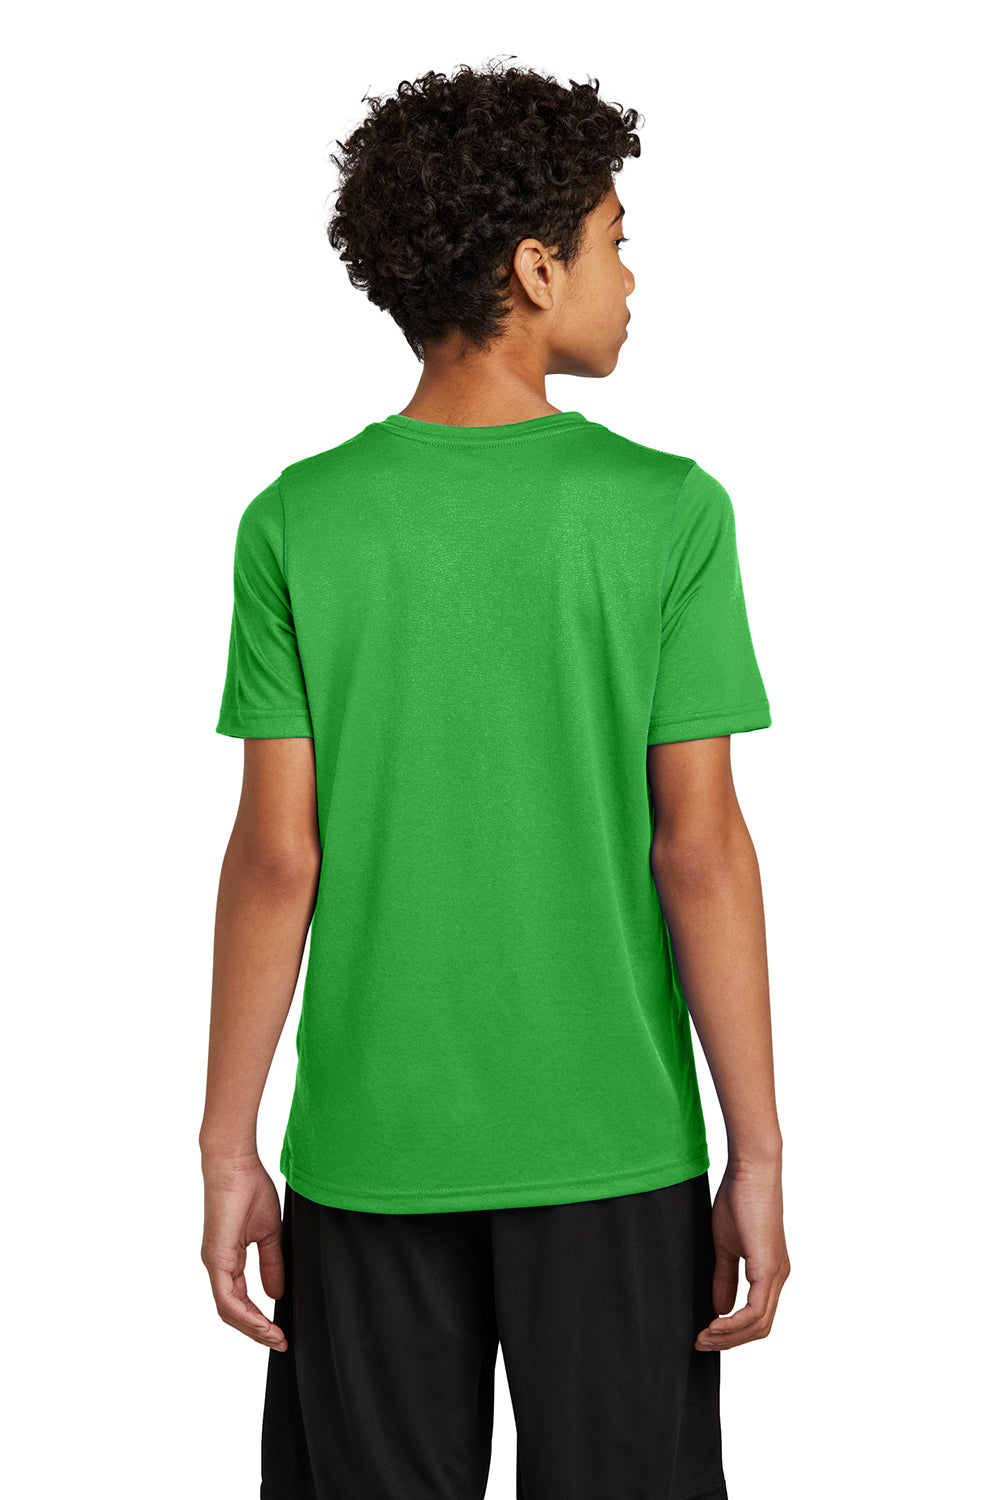 Nike NKDX8787 Youth rLegend Dri-Fit Moisture Wicking Short Sleeve Crewneck T-Shirt Apple Green Model Back